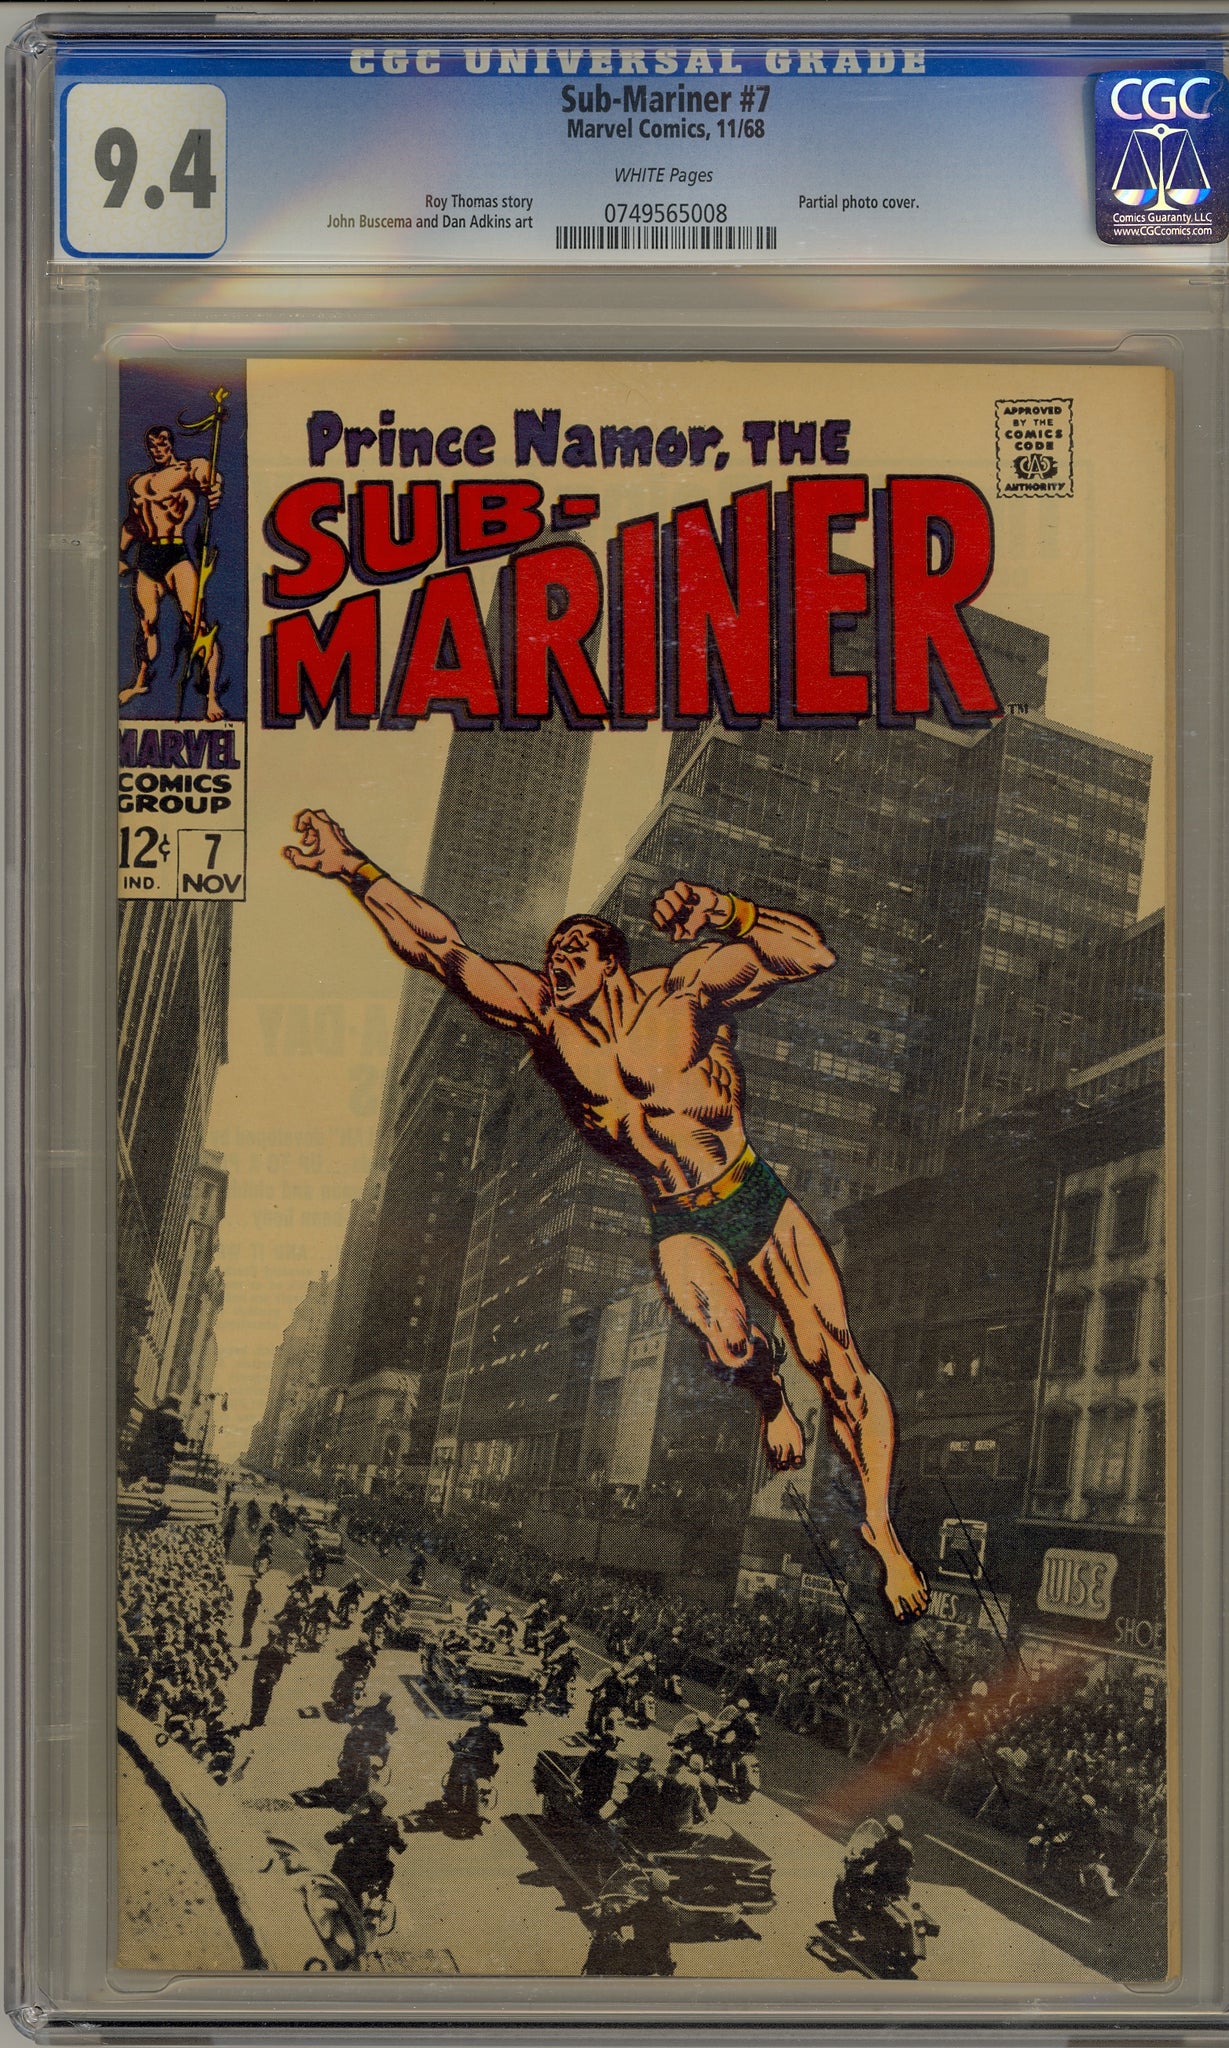 Sub-Mariner #7 (1968)